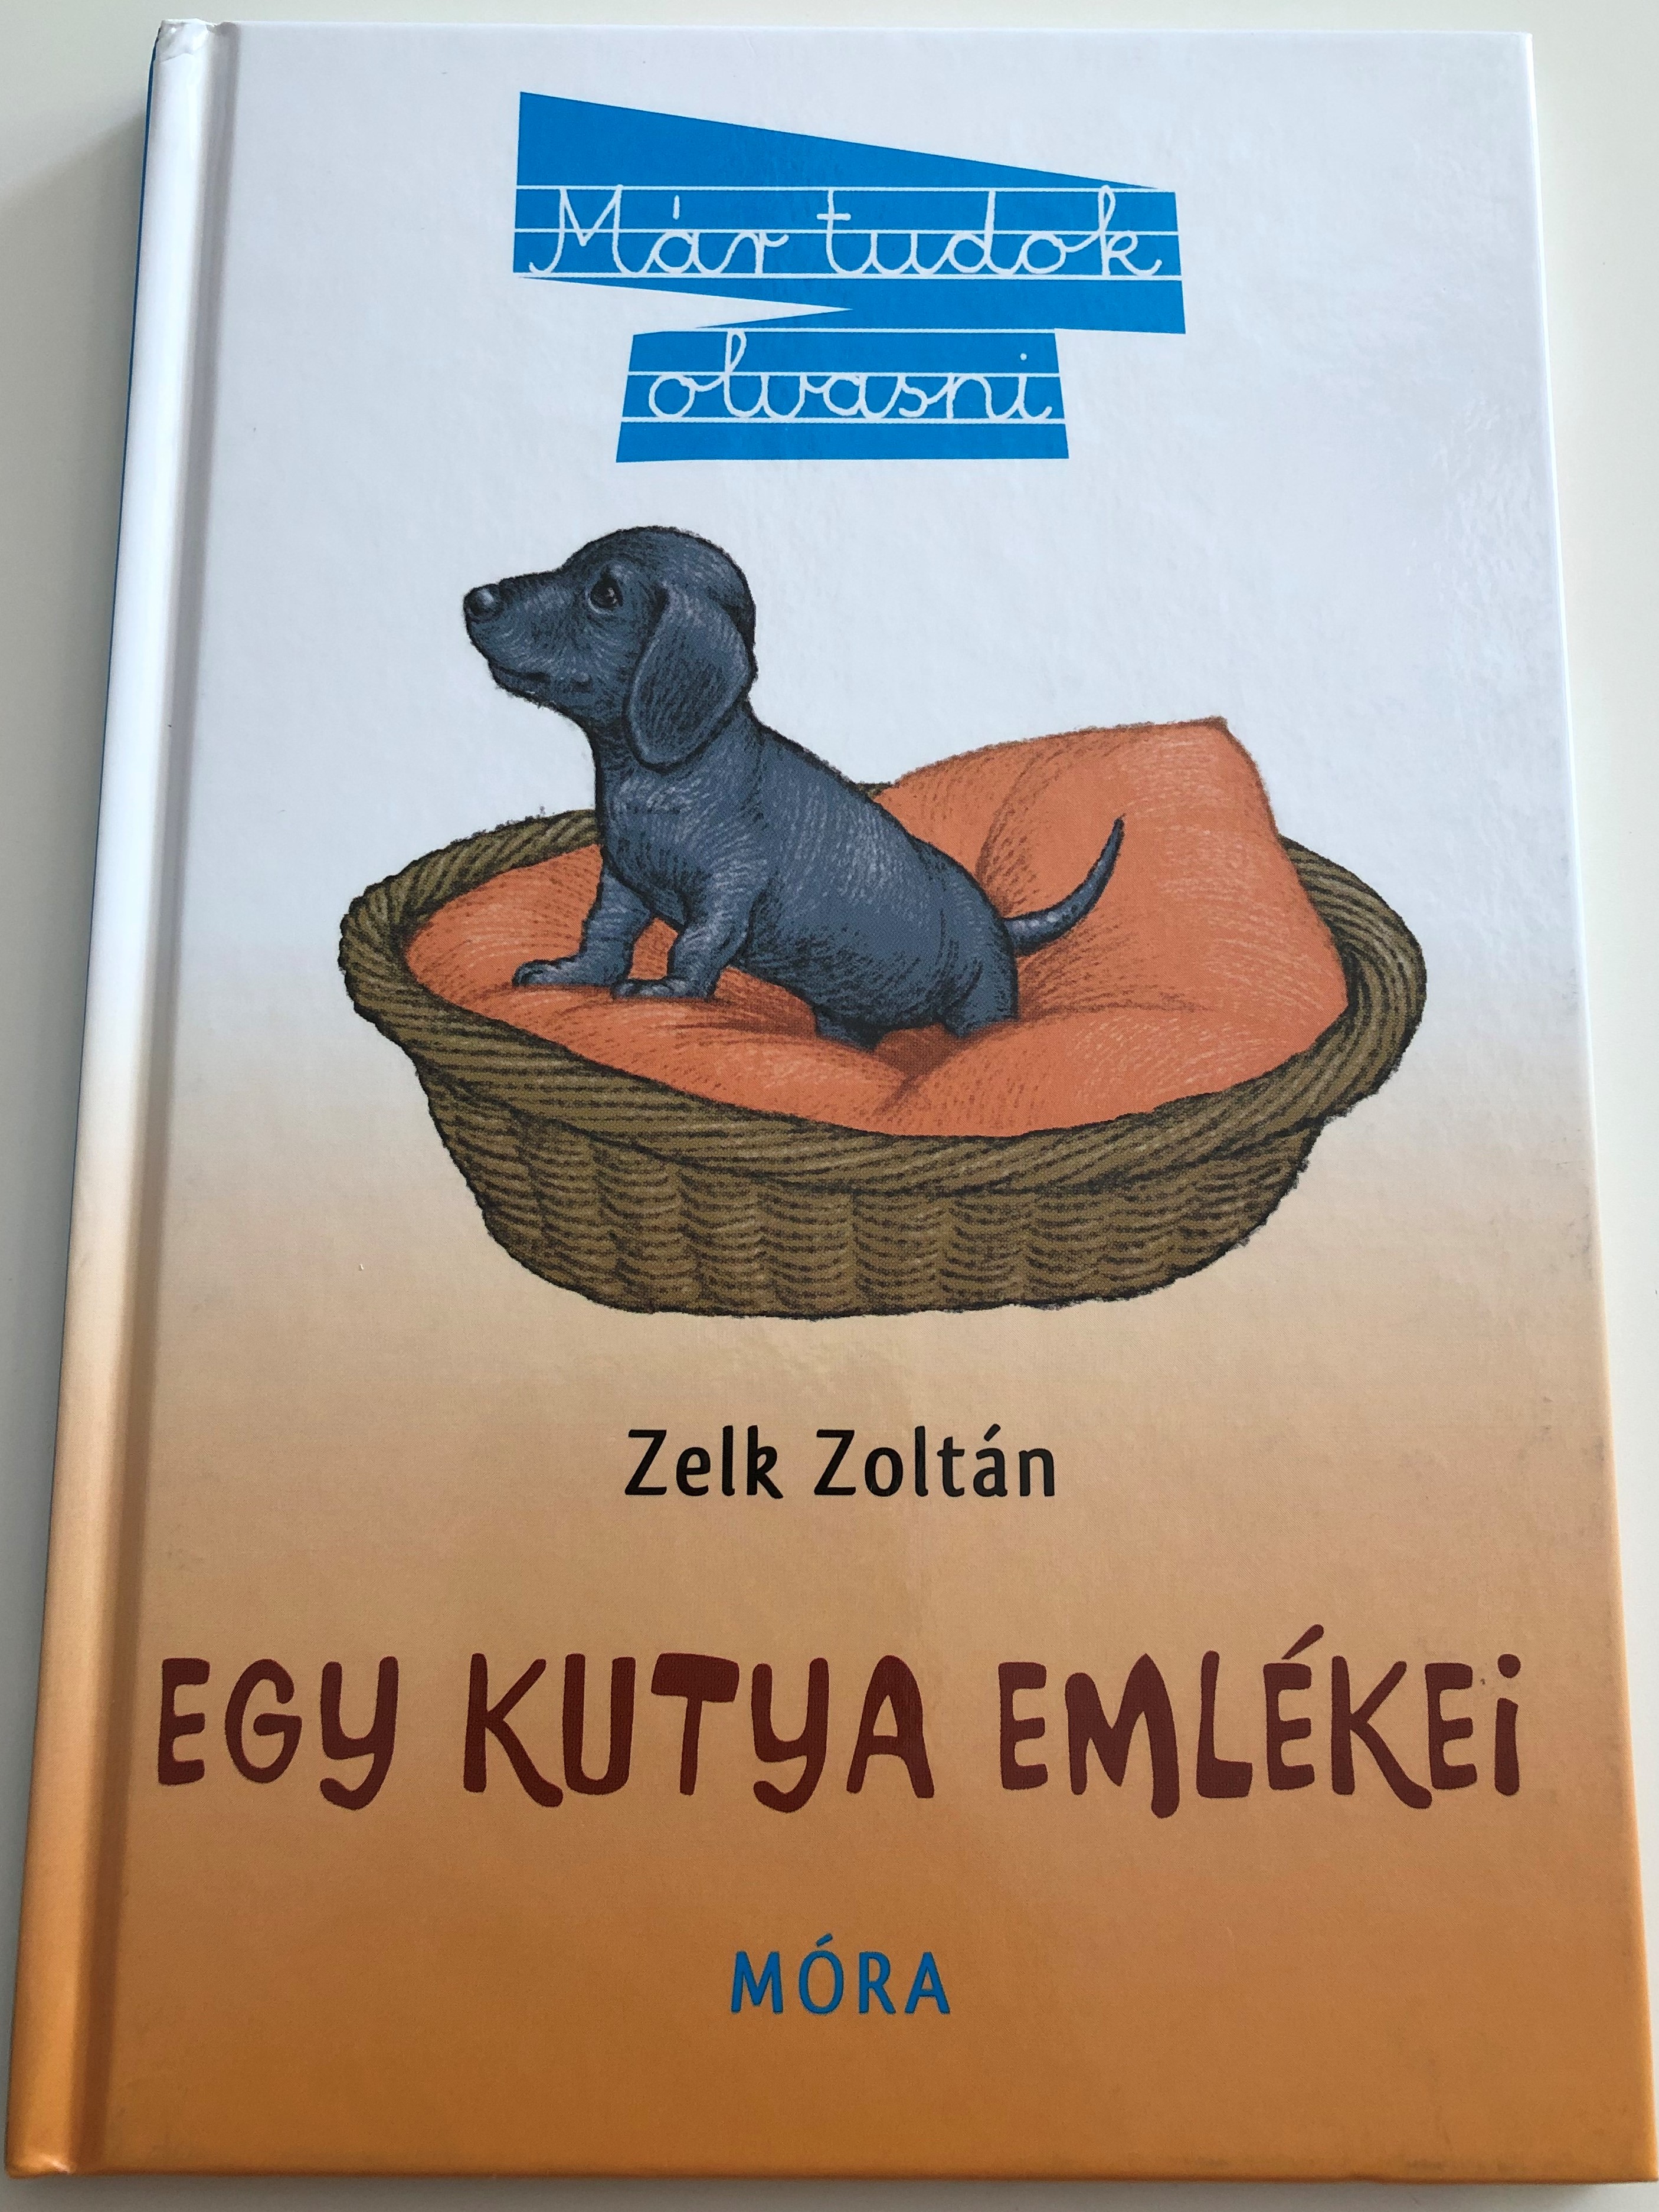 egy-kutya-eml-kei-by-zelk-zolt-n-memories-of-a-dog-hungarian-storybook-for-3rd-graders-m-r-tudok-olvasni-m-ra-2012-1-.jpg